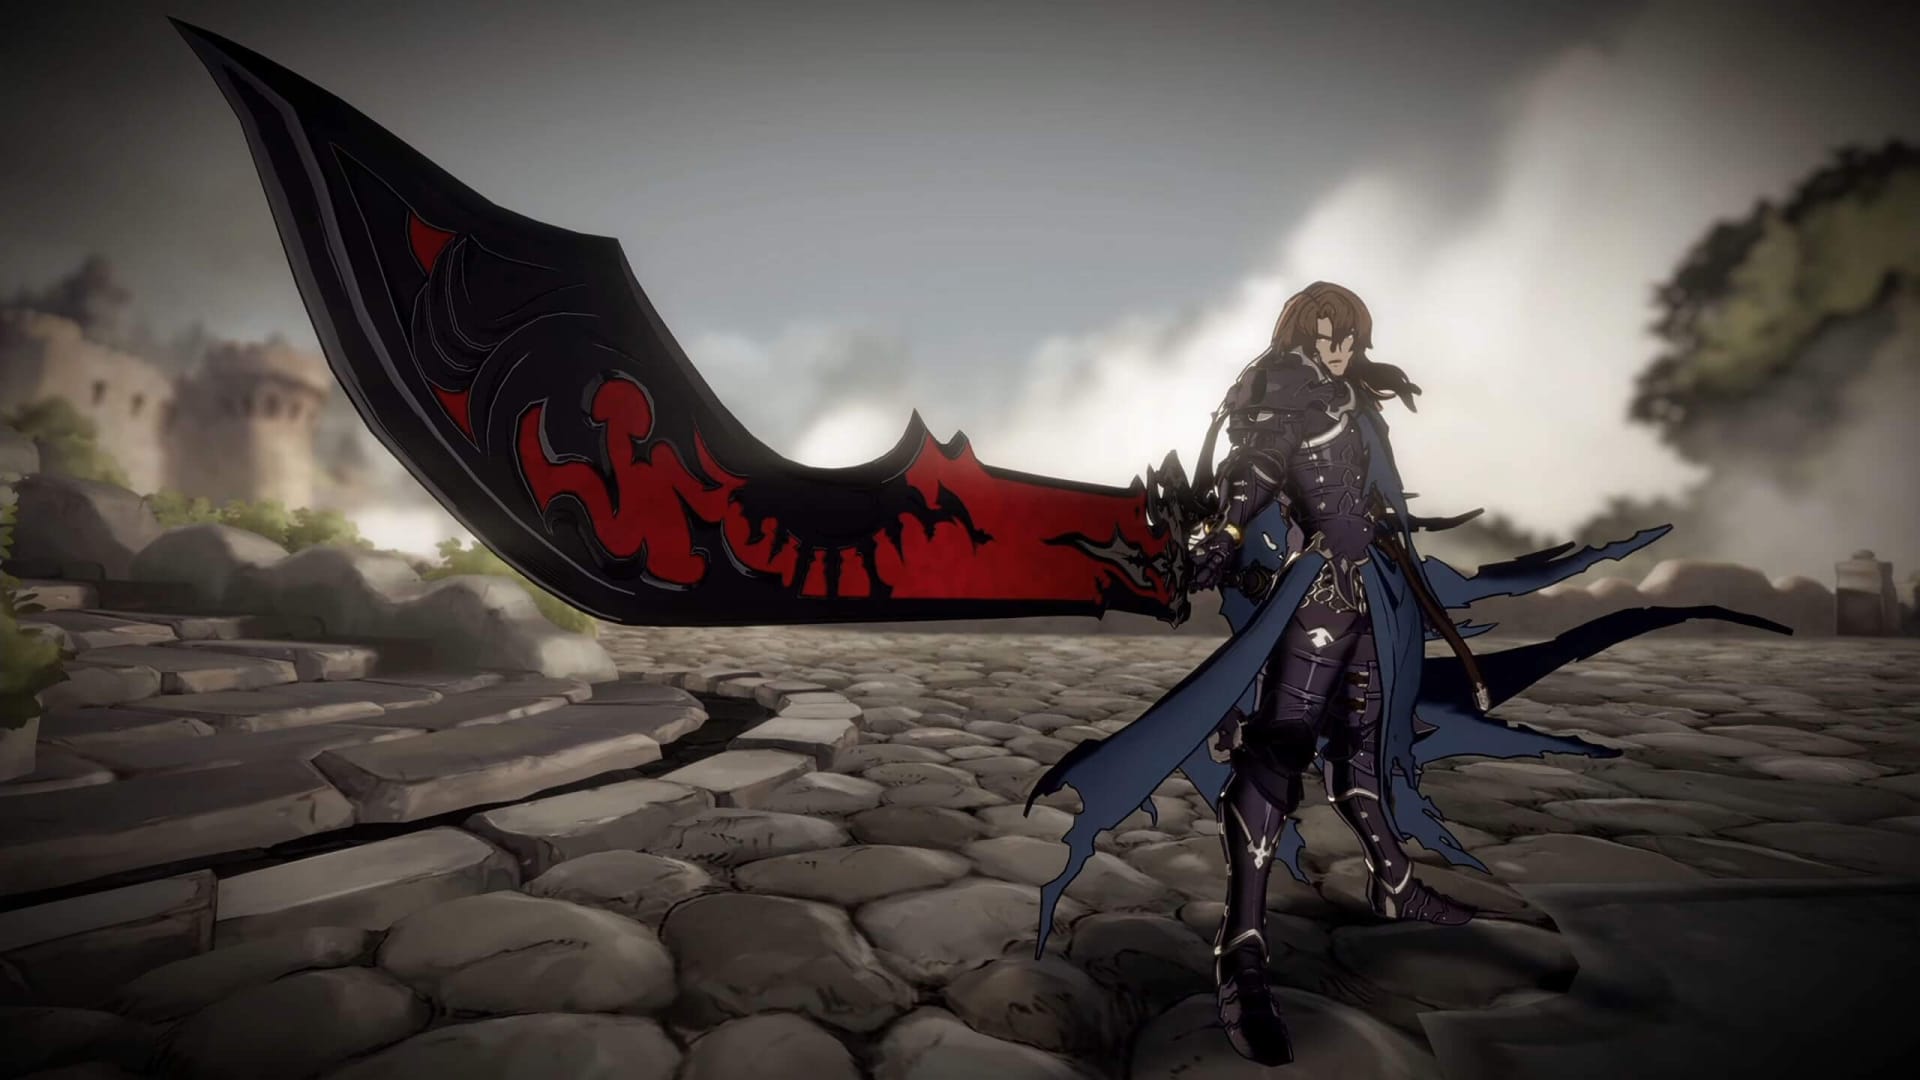 Granblue Fantasy Versus: Rising Siegfried Trailer Released, Online